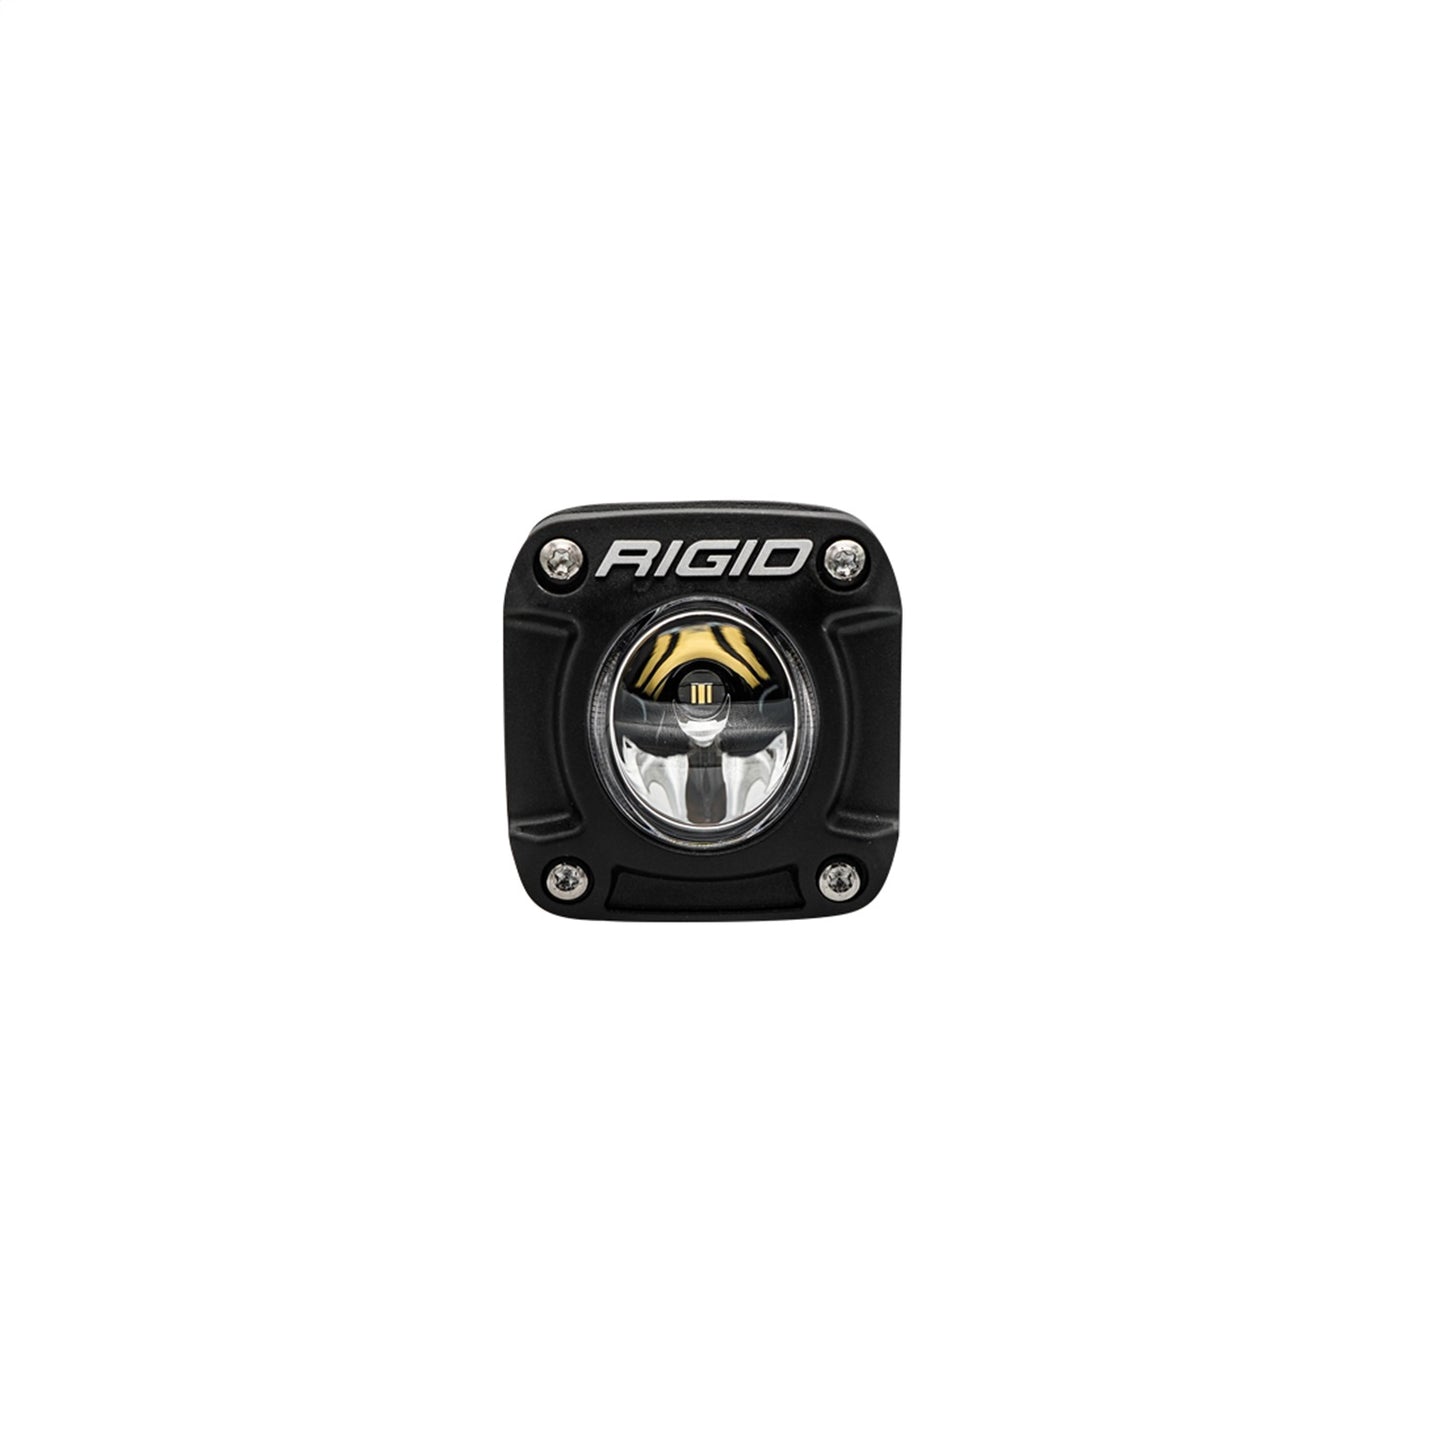 Rigid Industries - 491613 - Offroad/Racing Lamp